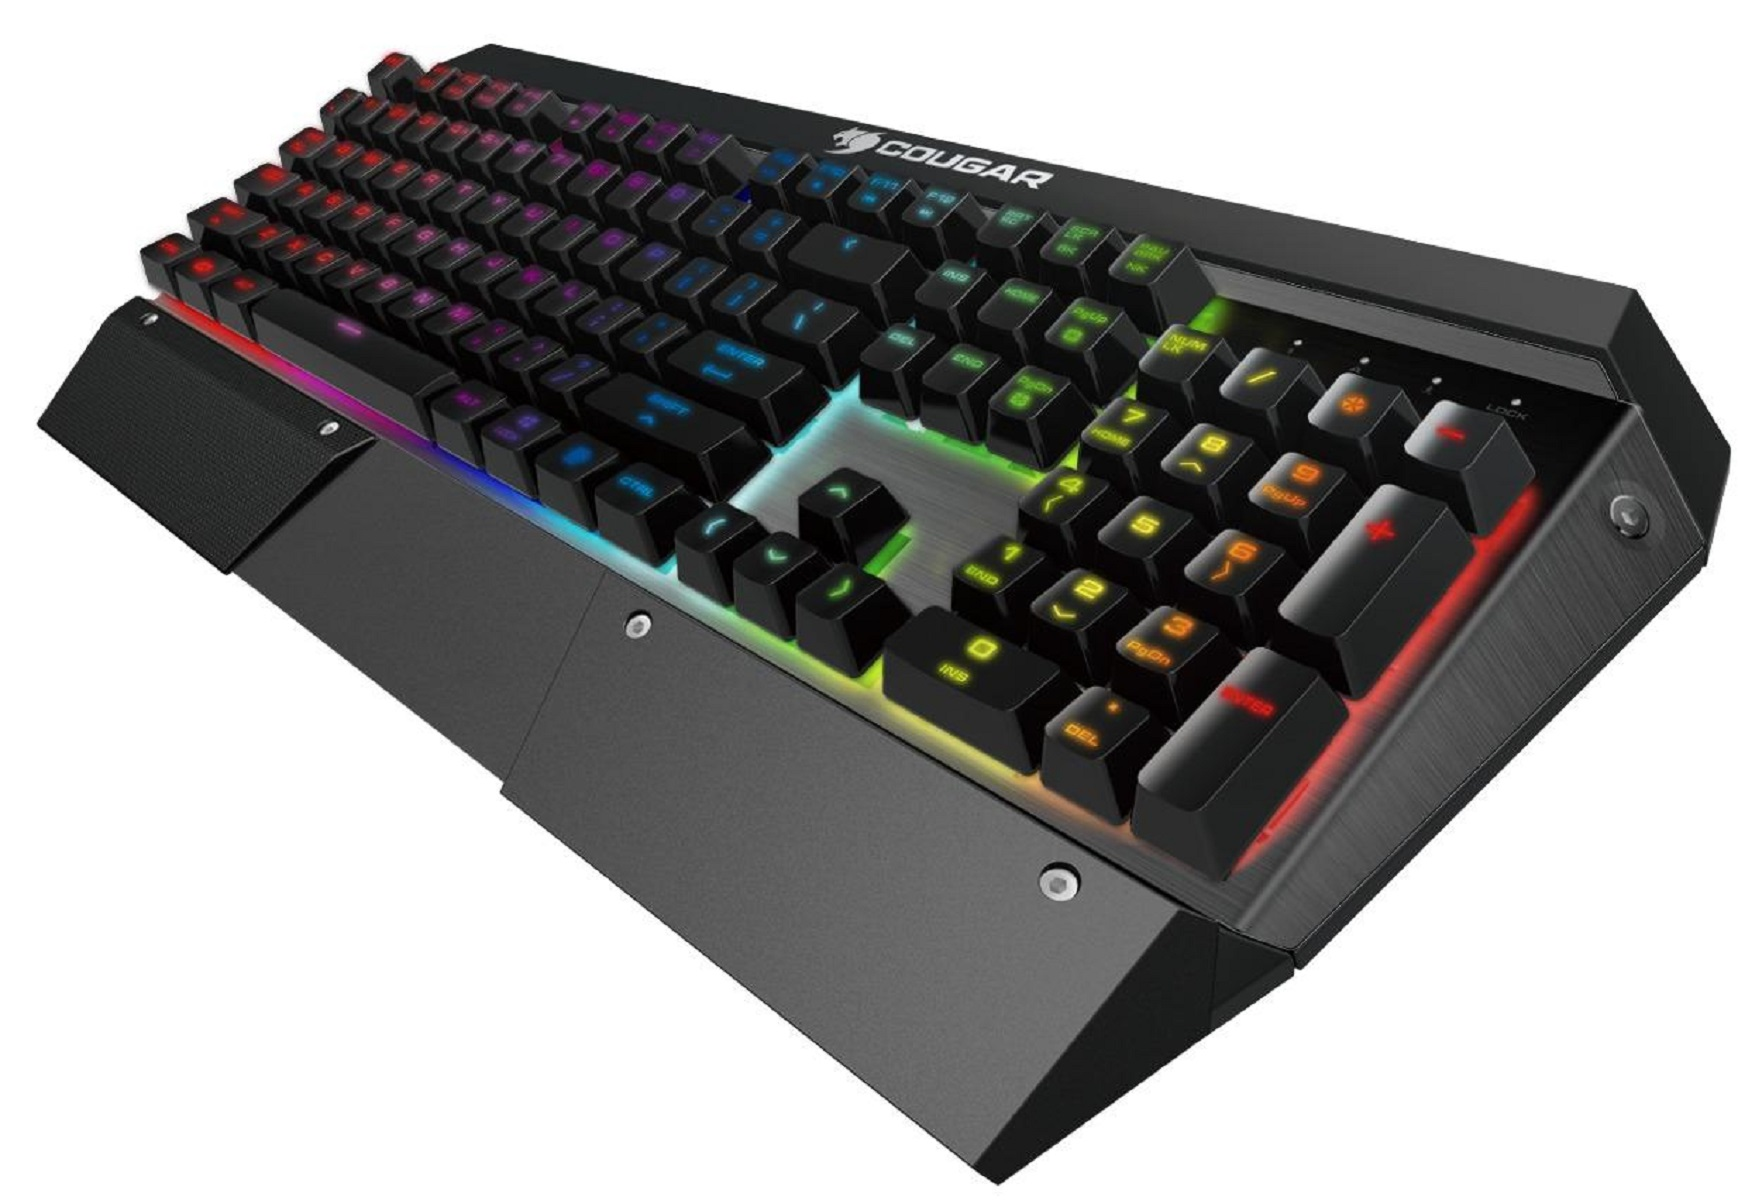 COUGAR Attack X3 RGB MX, Cherry Tastatur Gaming